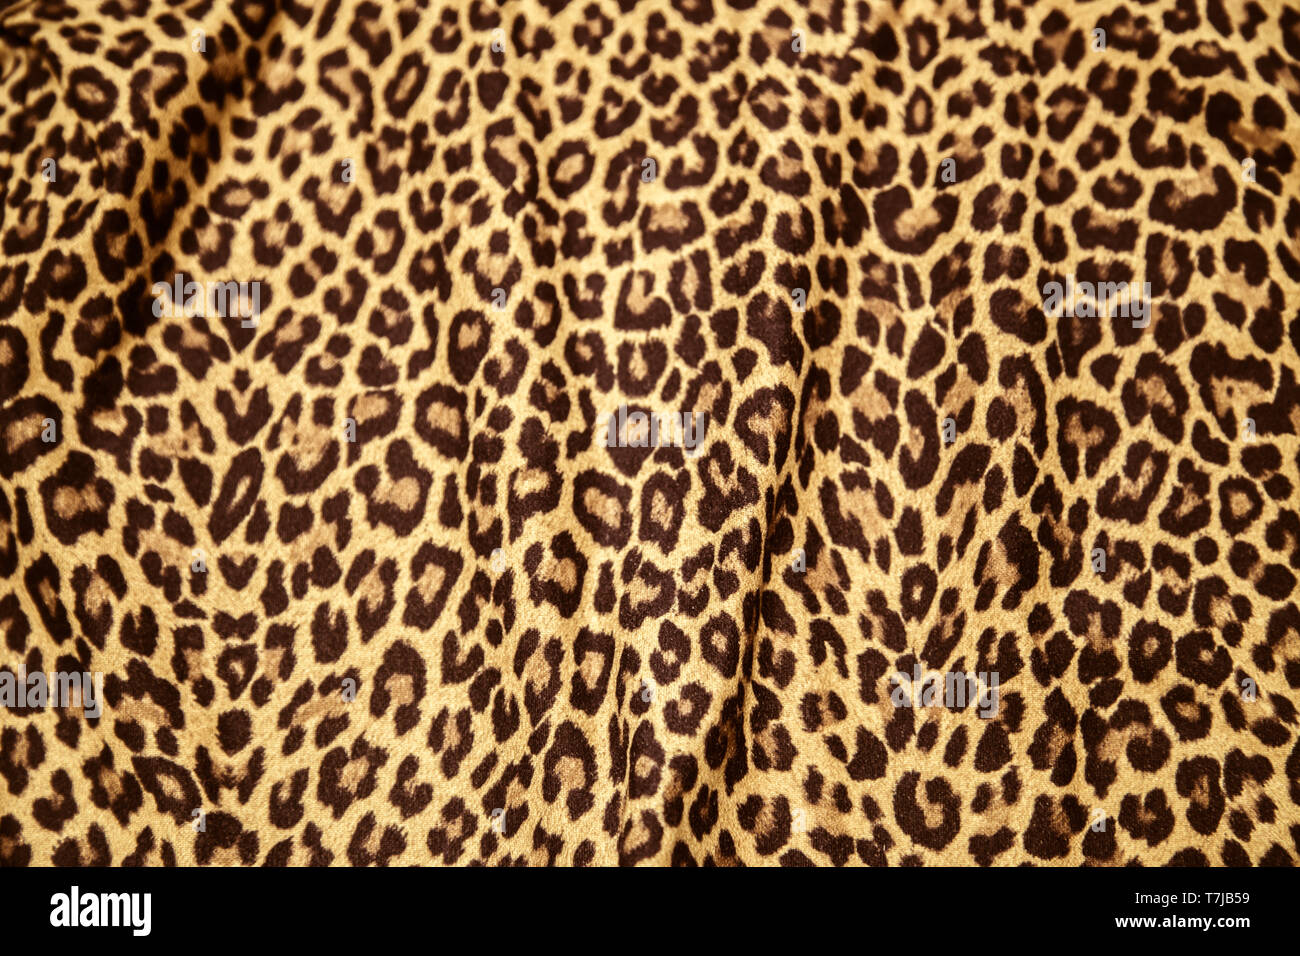 Imprimir imagen de Leopard Leopard imprimir imagen patrón de tela de textura. Foto de stock